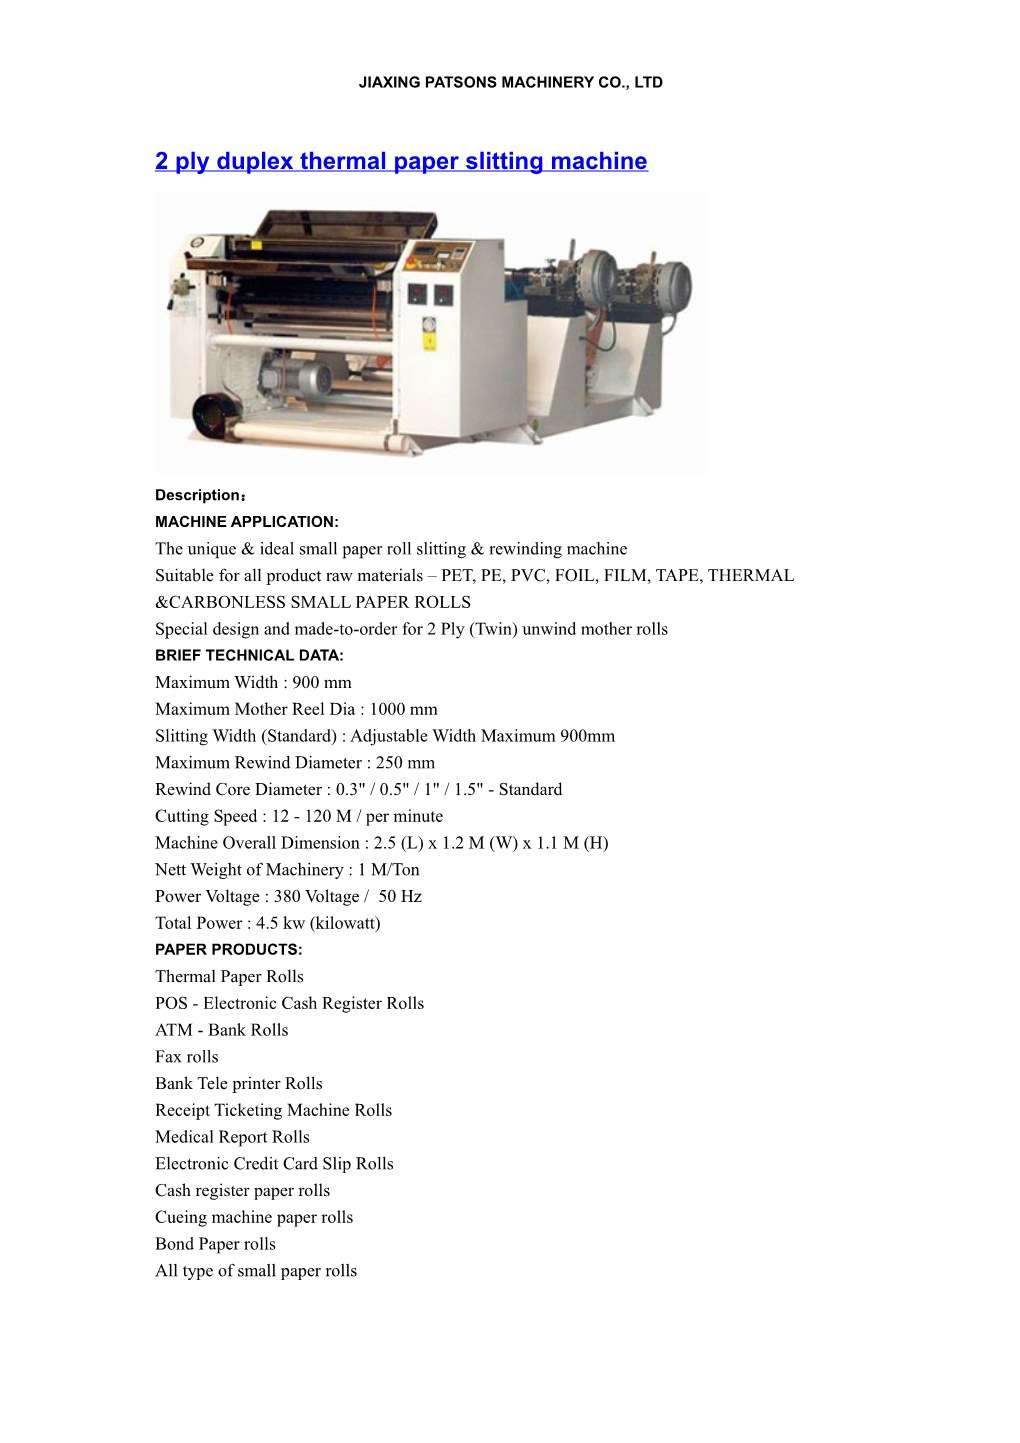 2 Ply Duplex Thermal Paper Slitting Machine